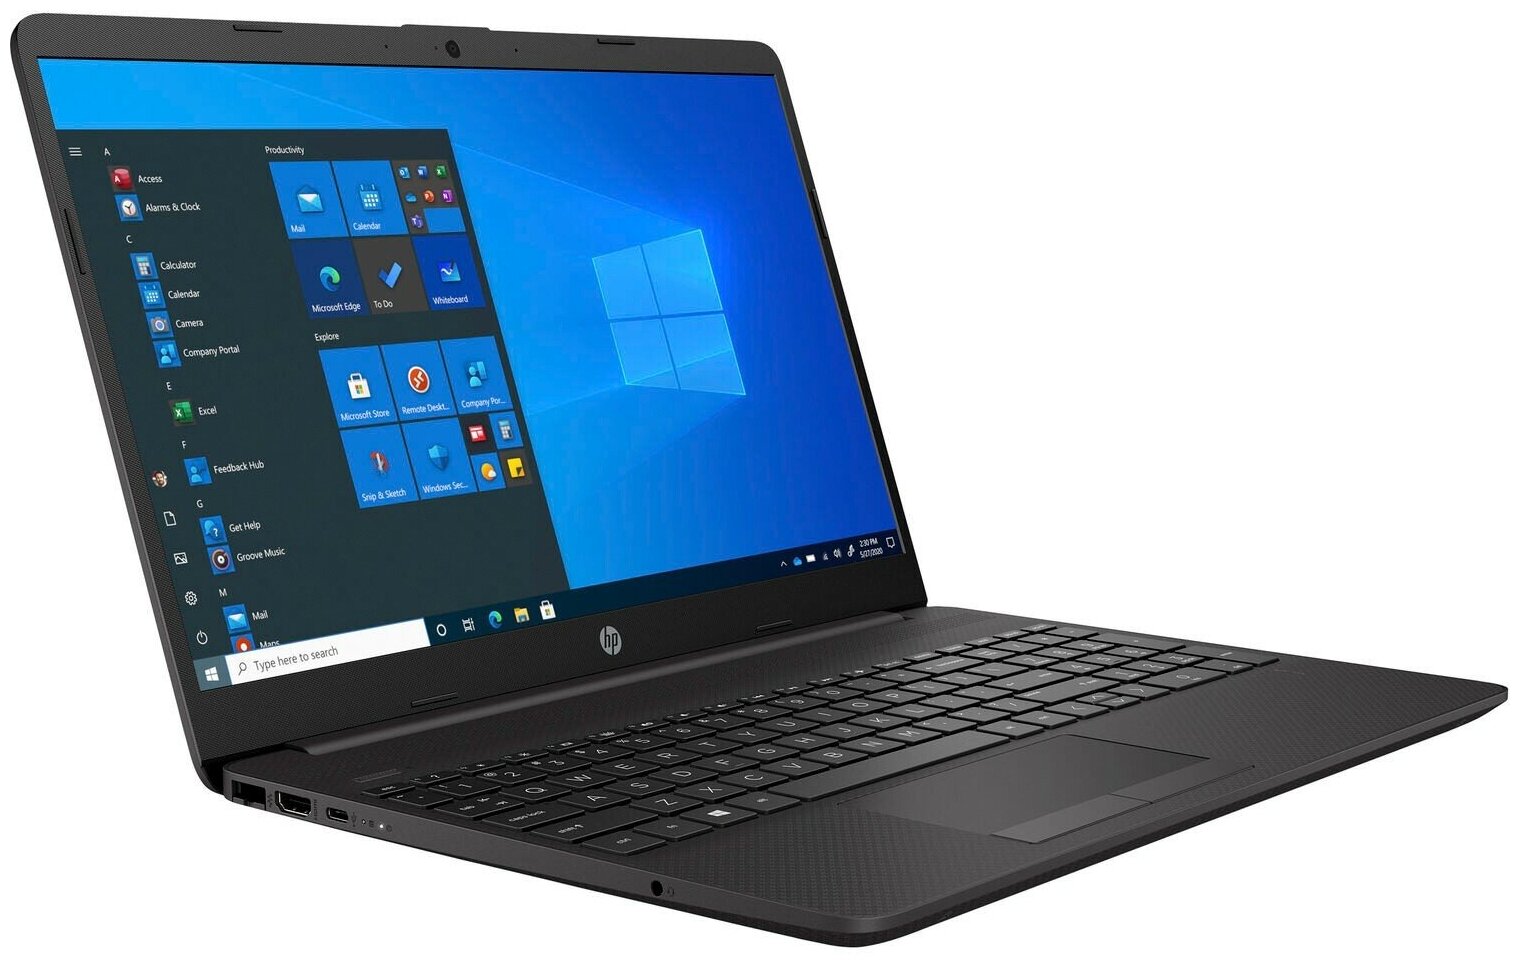 Ноутбук HP 255 G8 3A5P8EA (AMD Ryzen 3 3250U 2.6GHz/4096Mb/128Gb SSD/No ODD/AMD Radeon Graphics/Wi-Fi/Cam/15.6/1366x768/Windows 10 64-bit)